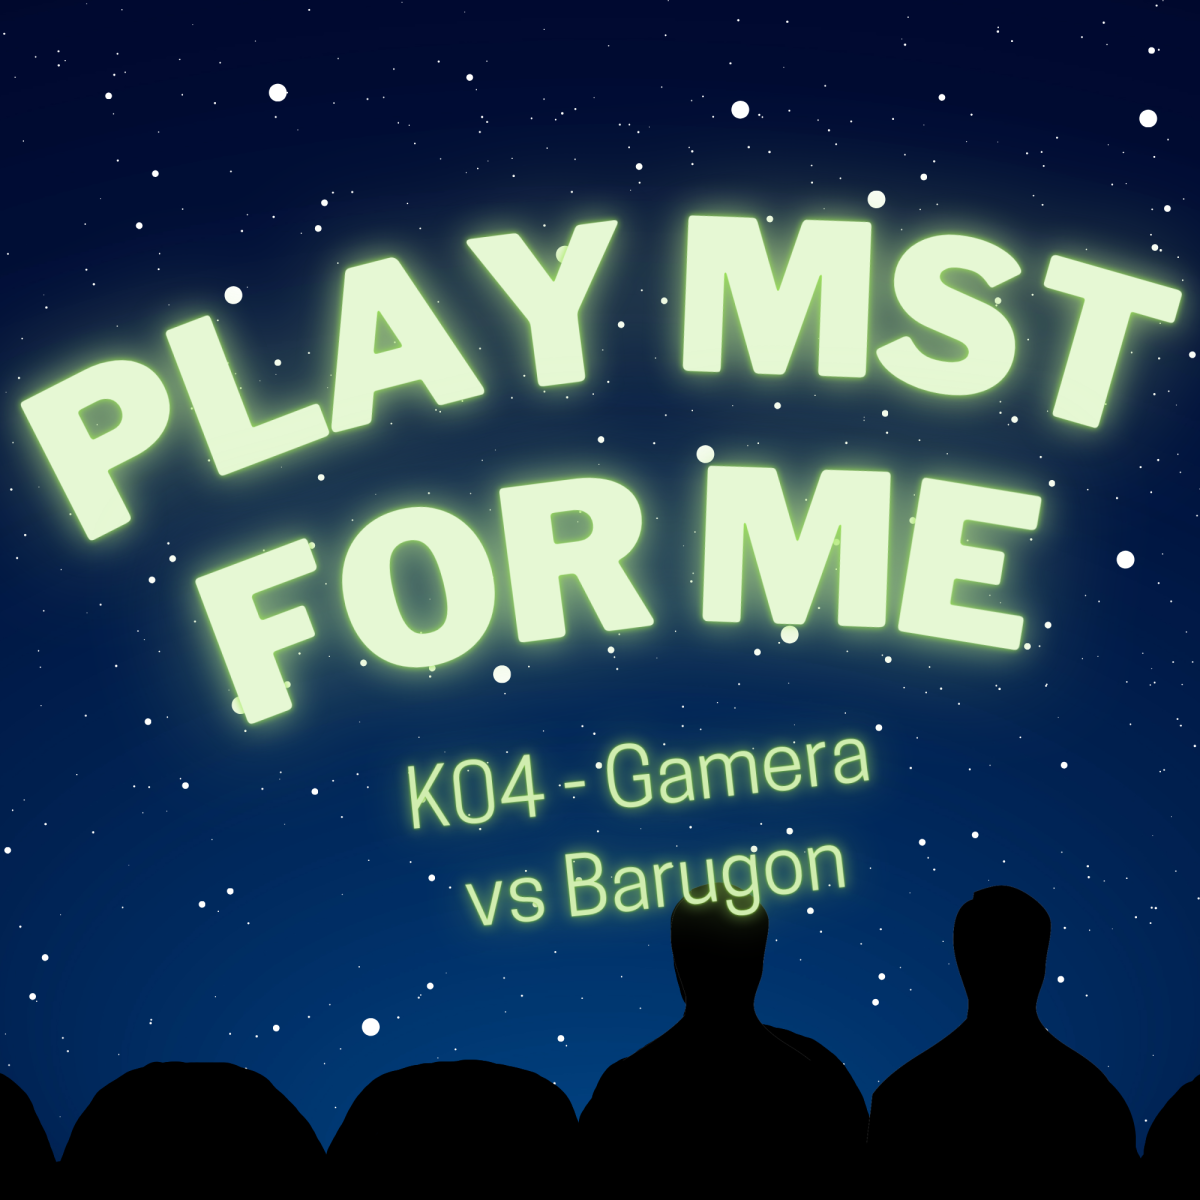 Play MST for Me #4: K04-Gamera vs Barugon